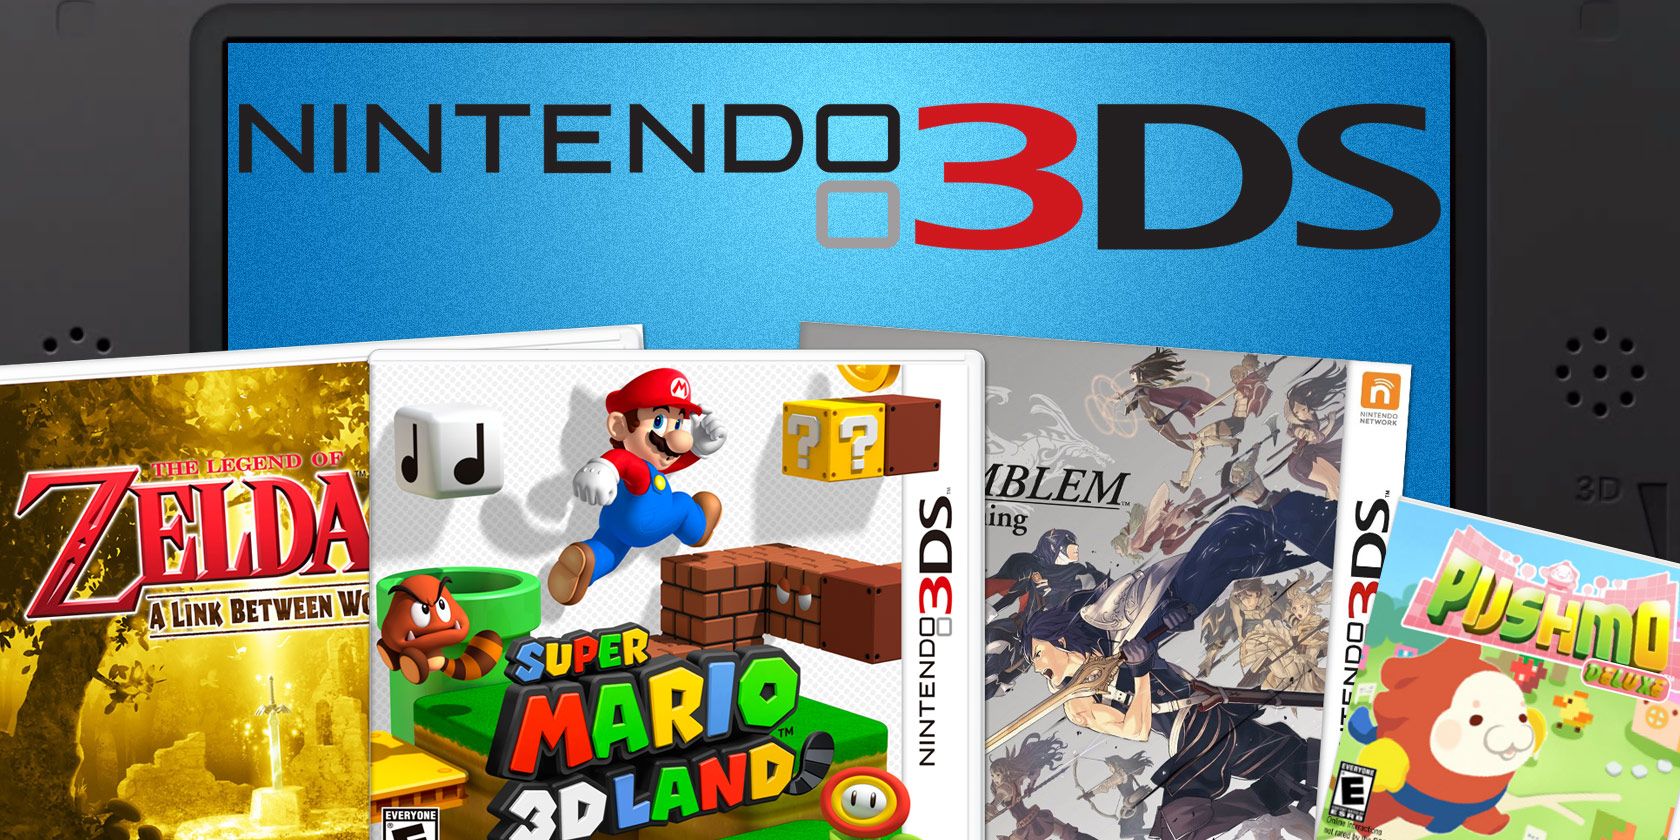 Nintendo 3ds игры. Nintendo 3ds реклама. Нинтендо 2дс игры. Игры Нинтендо ДС Japan.